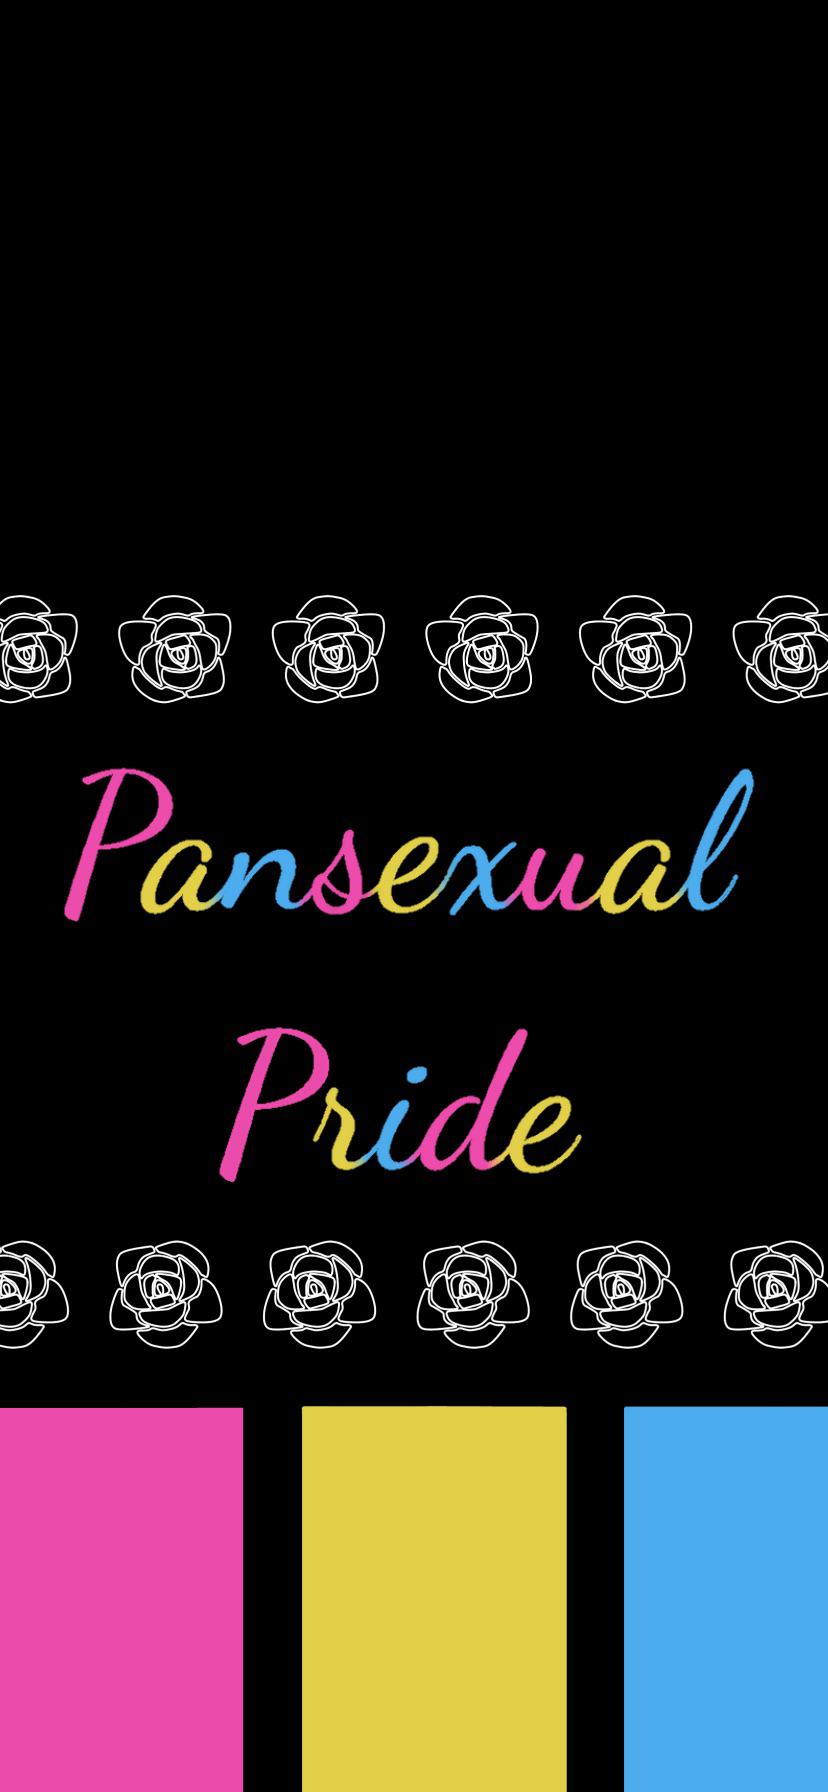 Pansexual Pride lock or home .reddit.com